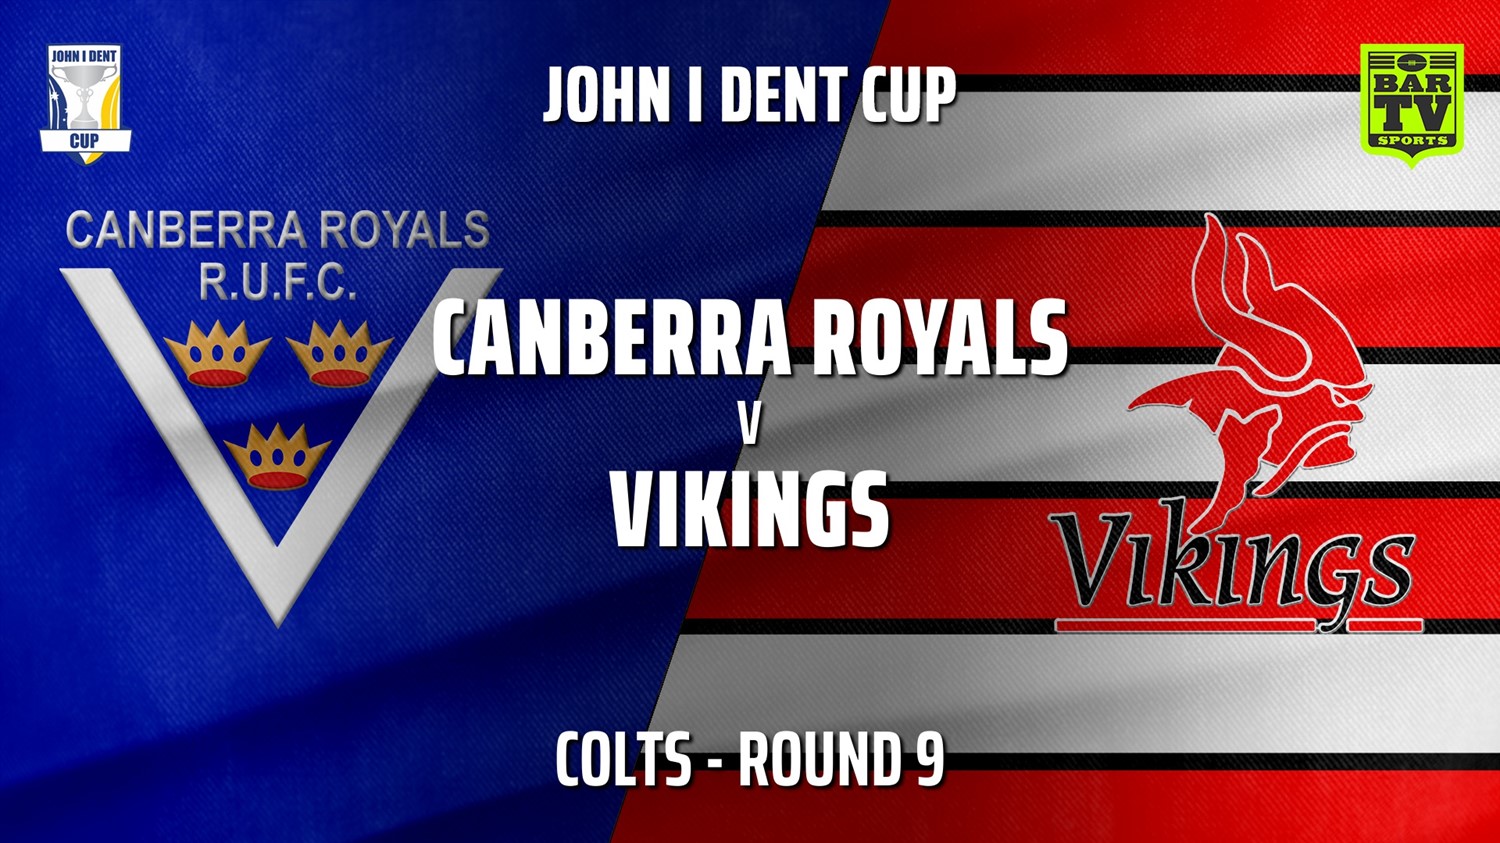 210626-John I Dent (ACT) Round 9 - Colts - Canberra Royals v Tuggeranong Vikings Minigame Slate Image